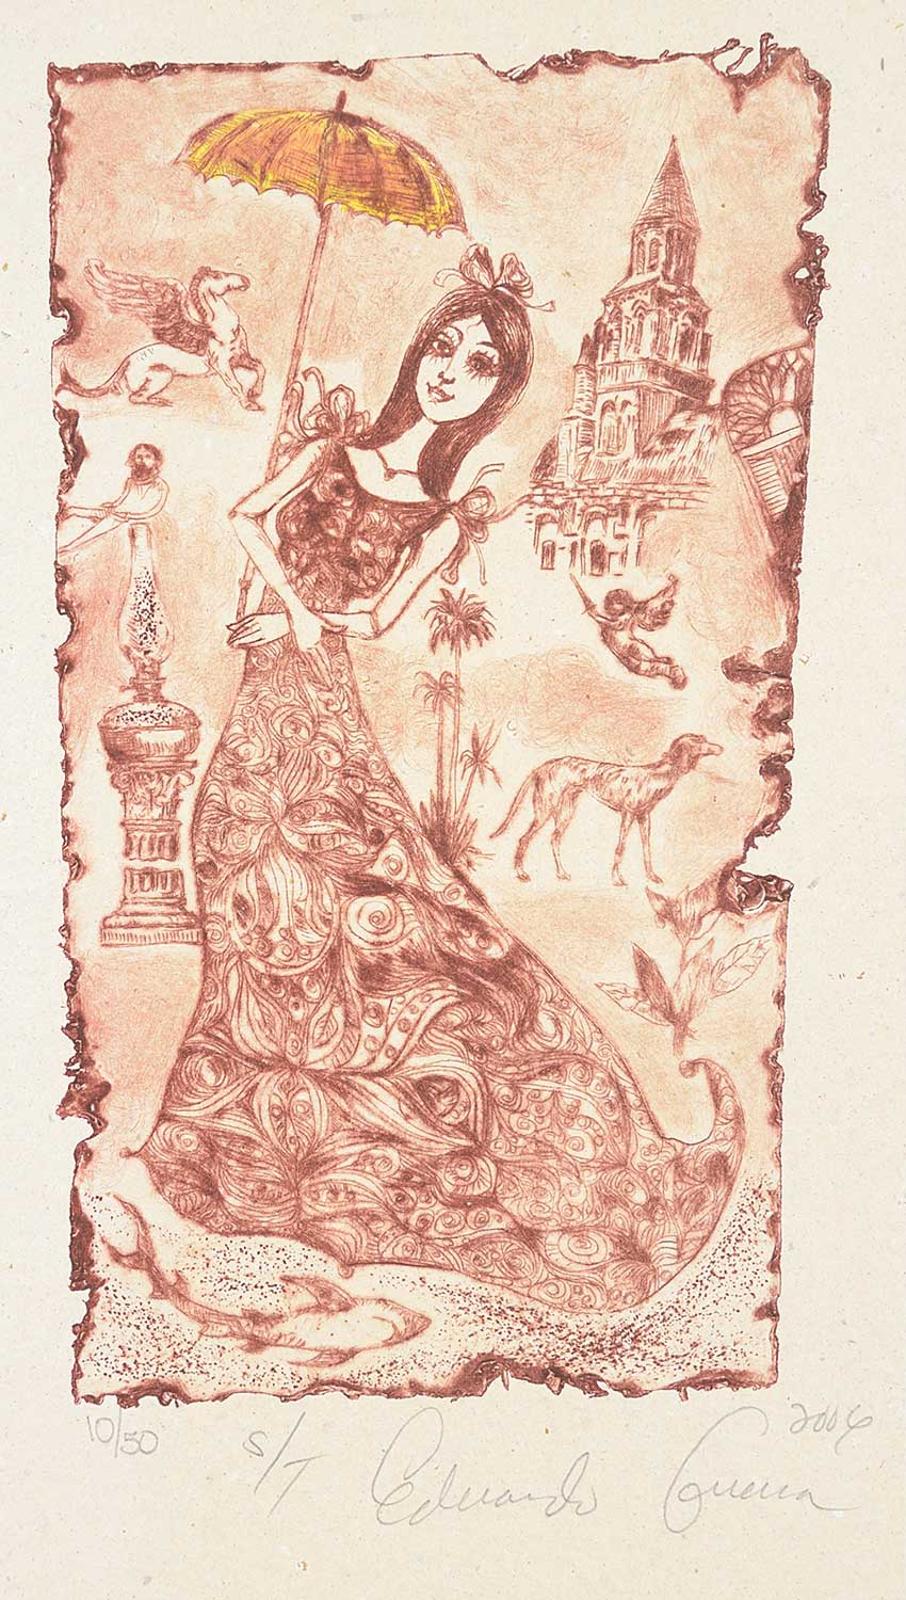 Edwardo Guena - Untitled - Fairytale Dreams  #10/50